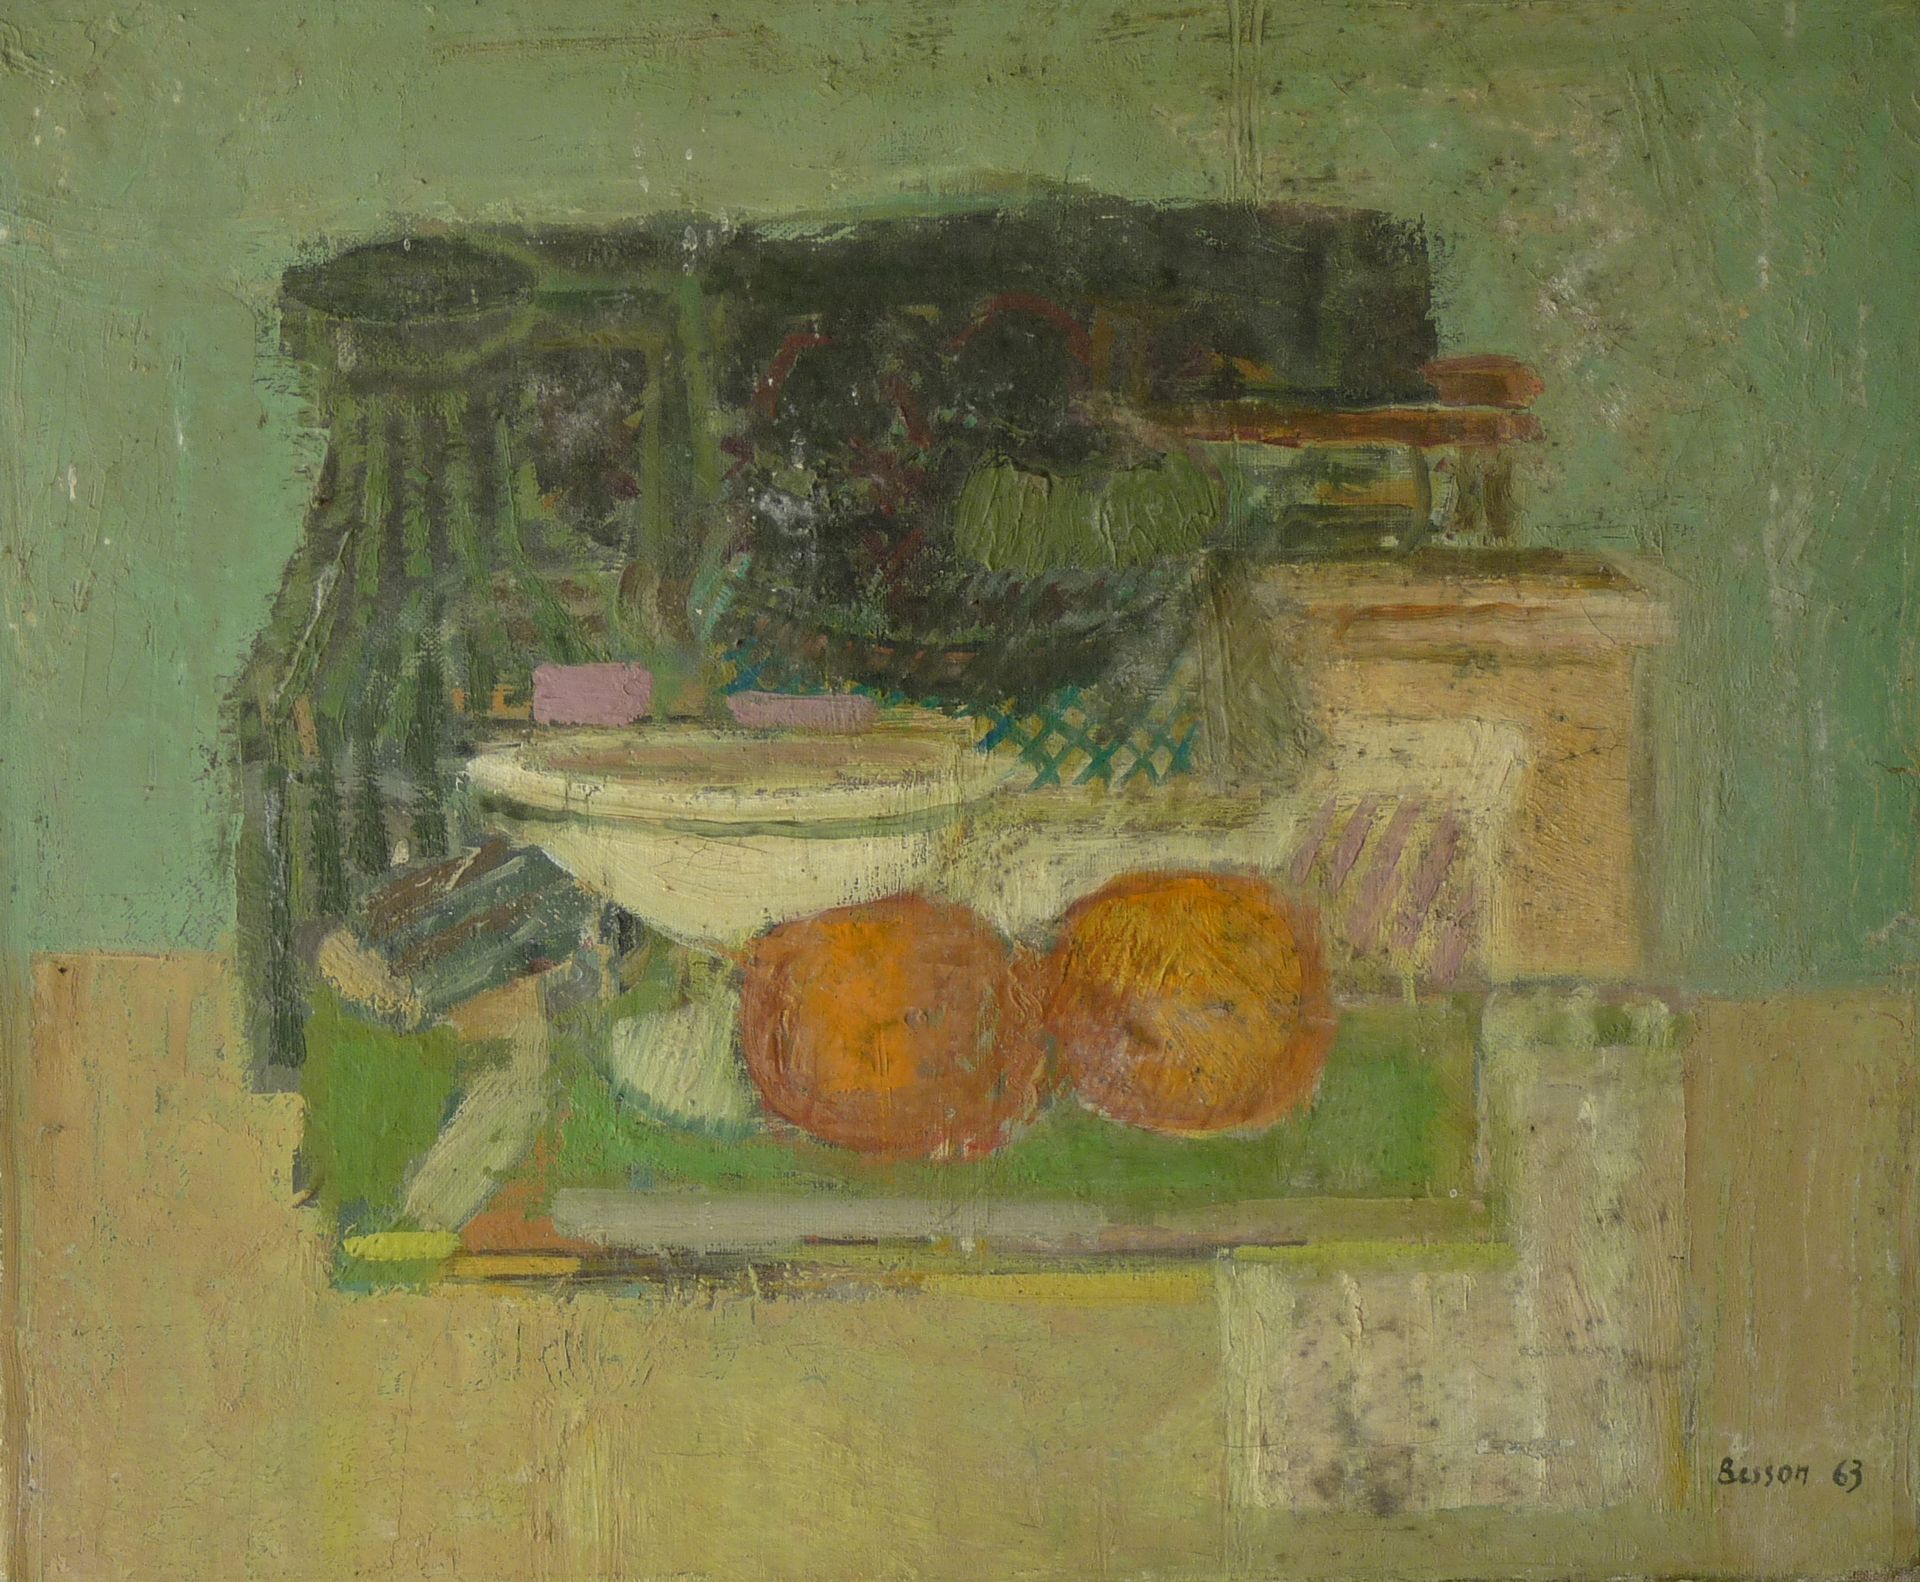 Null 让-克劳德-贝松-吉拉尔 (1938-2021)

无题21，1963年

布面油画，右下方有签名和日期

38 x 46 厘米